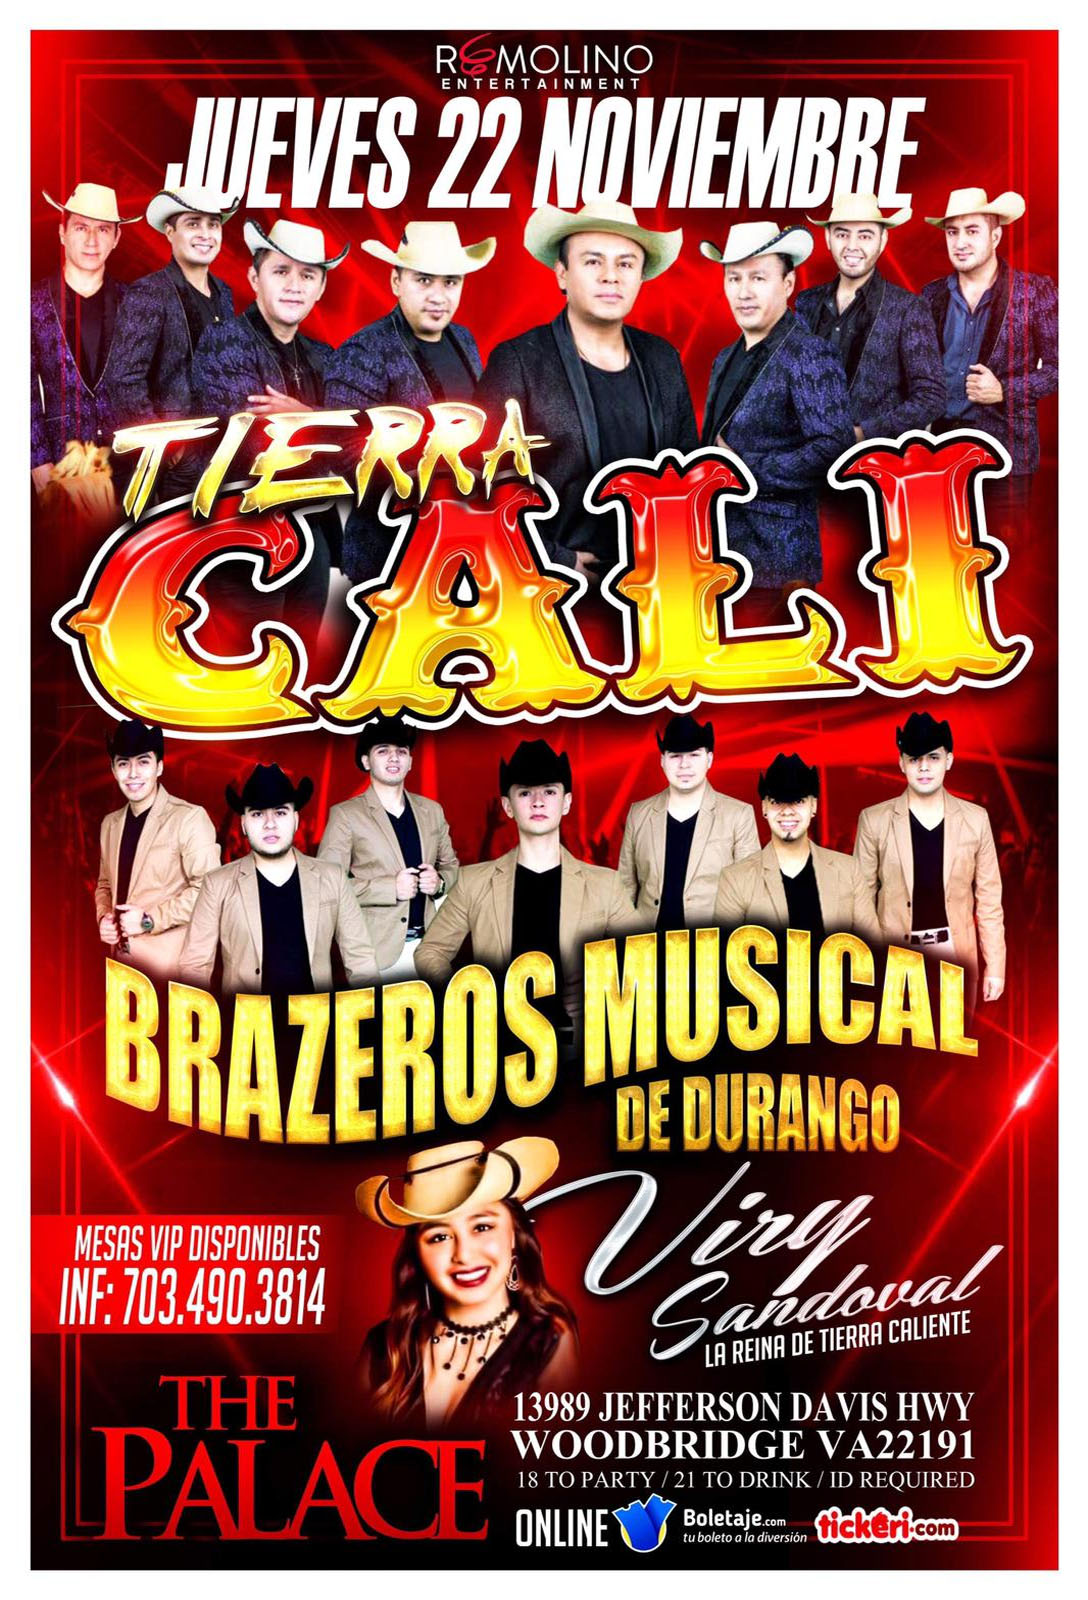 Tierra Cali, Brazzeros Musical, Viry Sandoval